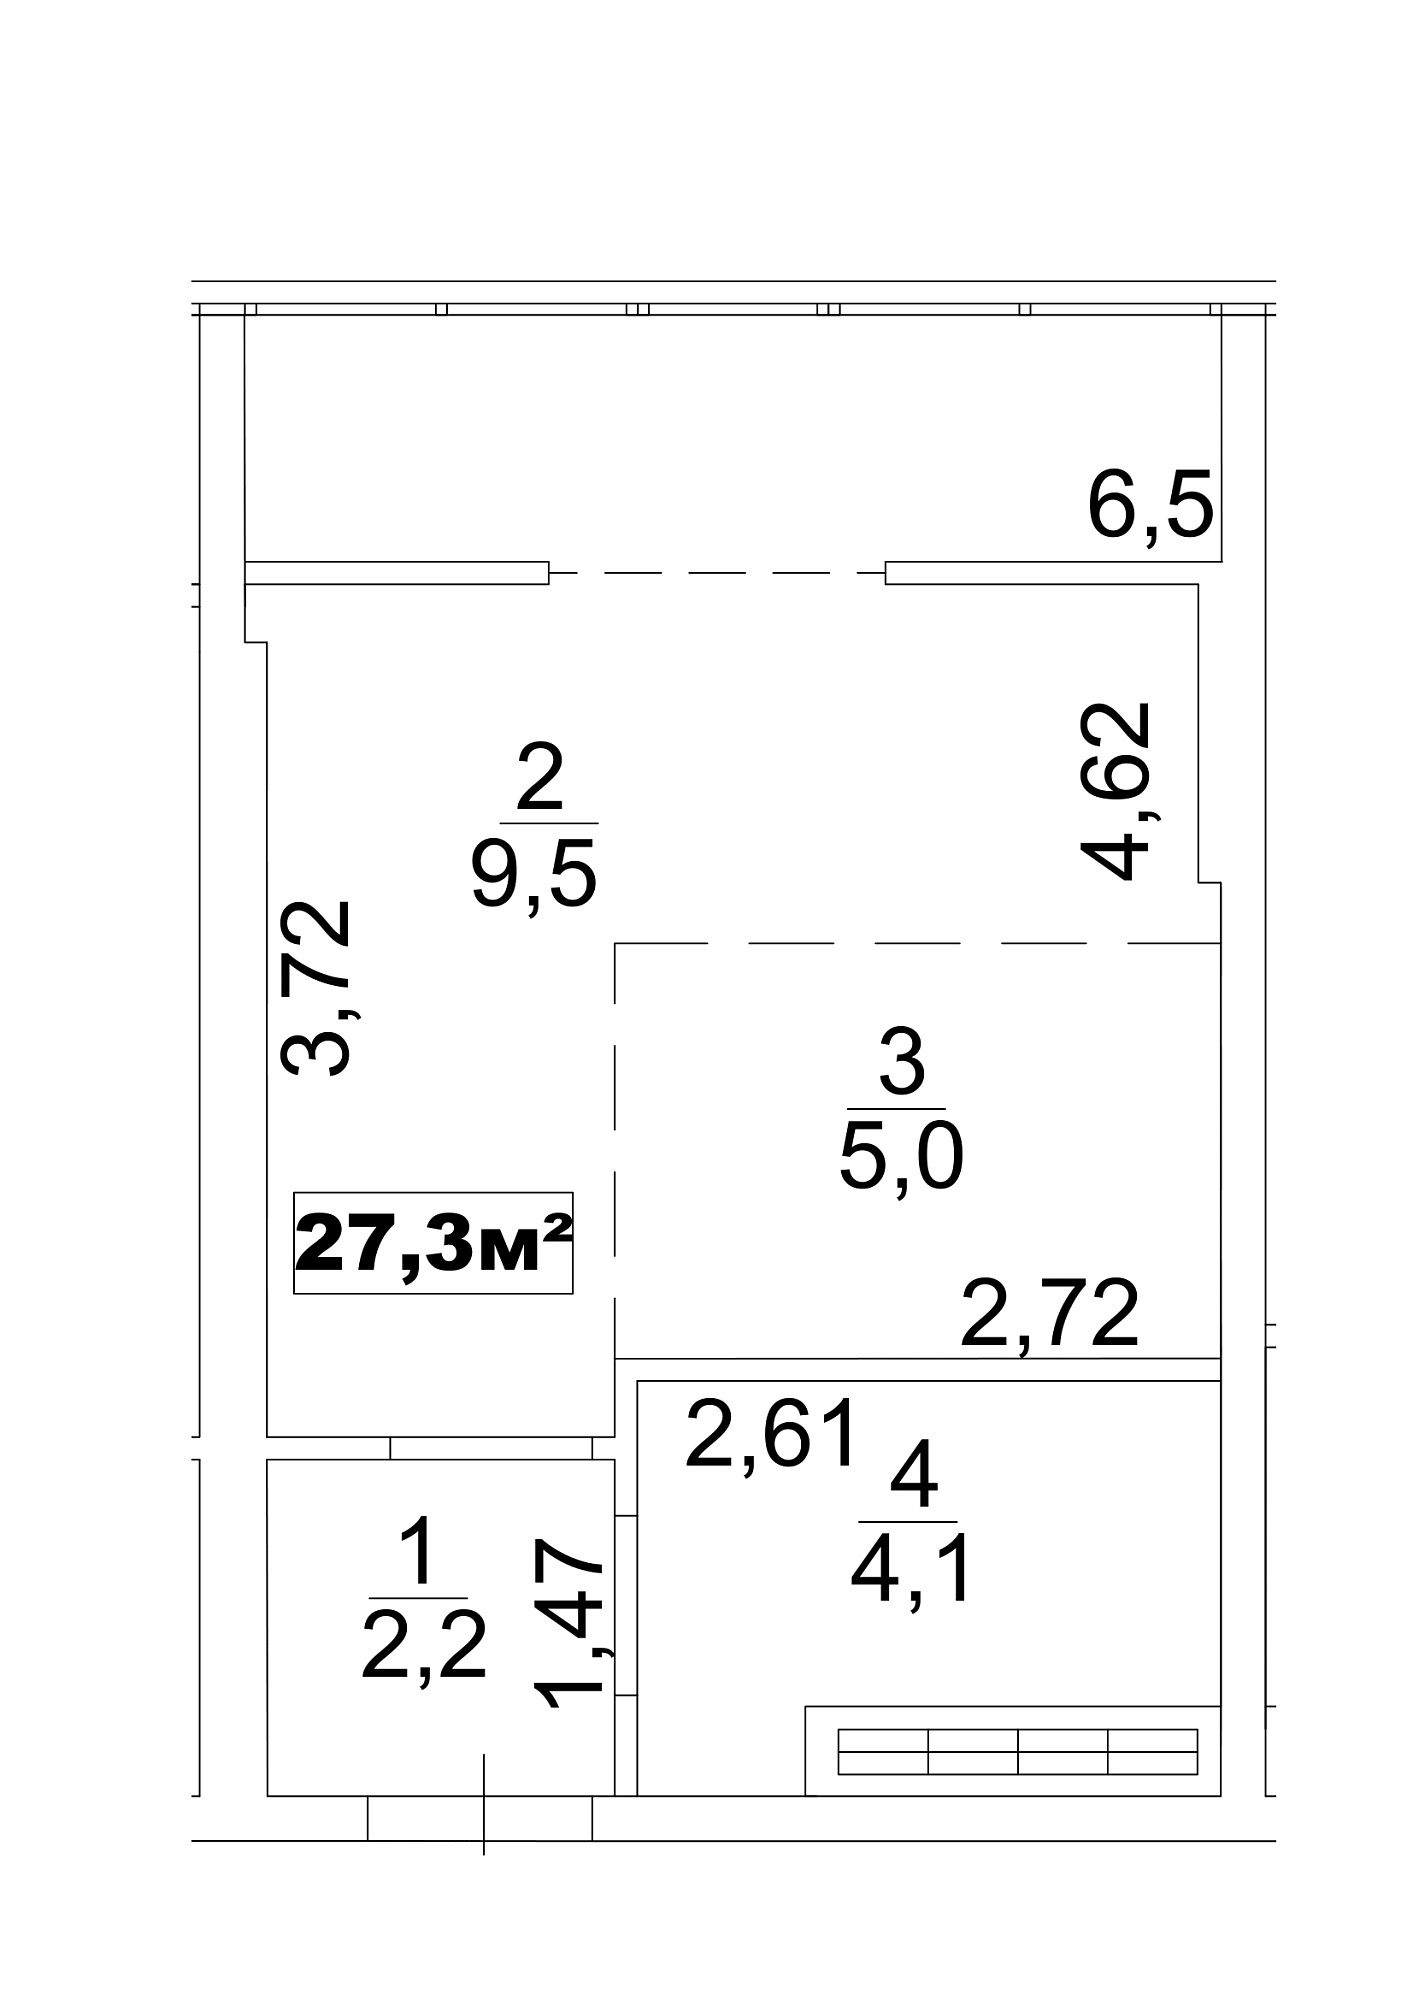 Планировка Smart-квартира площей 27.3м2, AB-13-10/0081в.